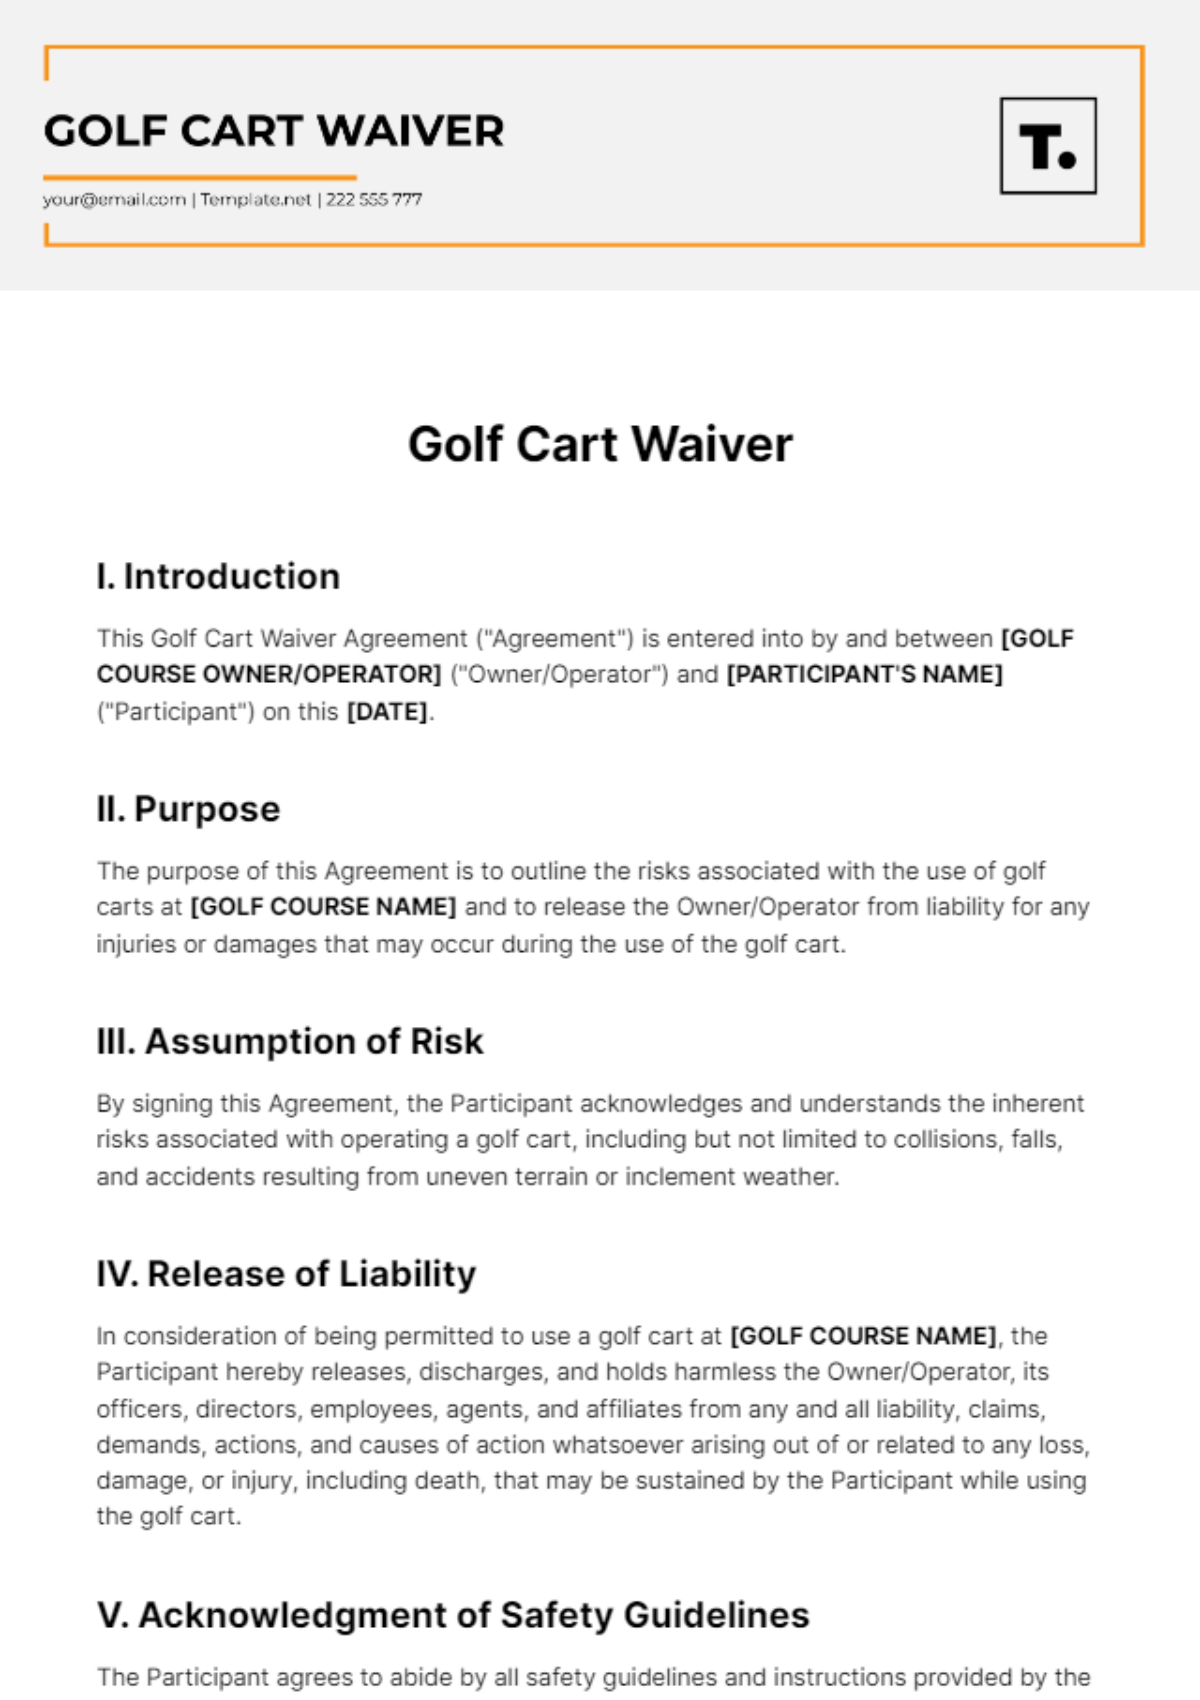 Golf Cart Waiver Template